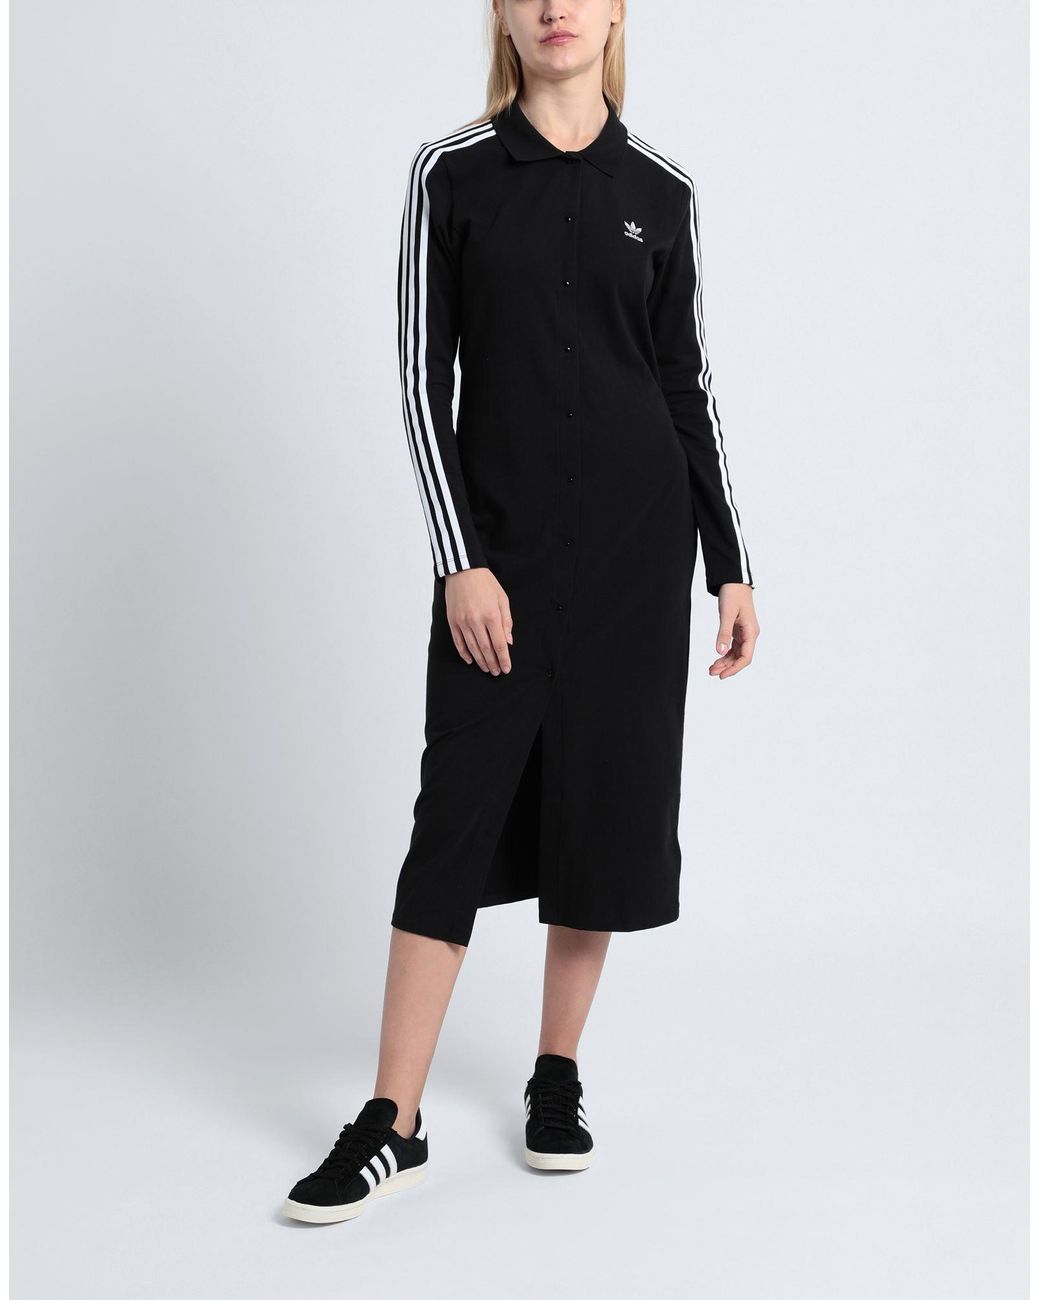 adidas Originals Dress With Logo in Black | Lyst